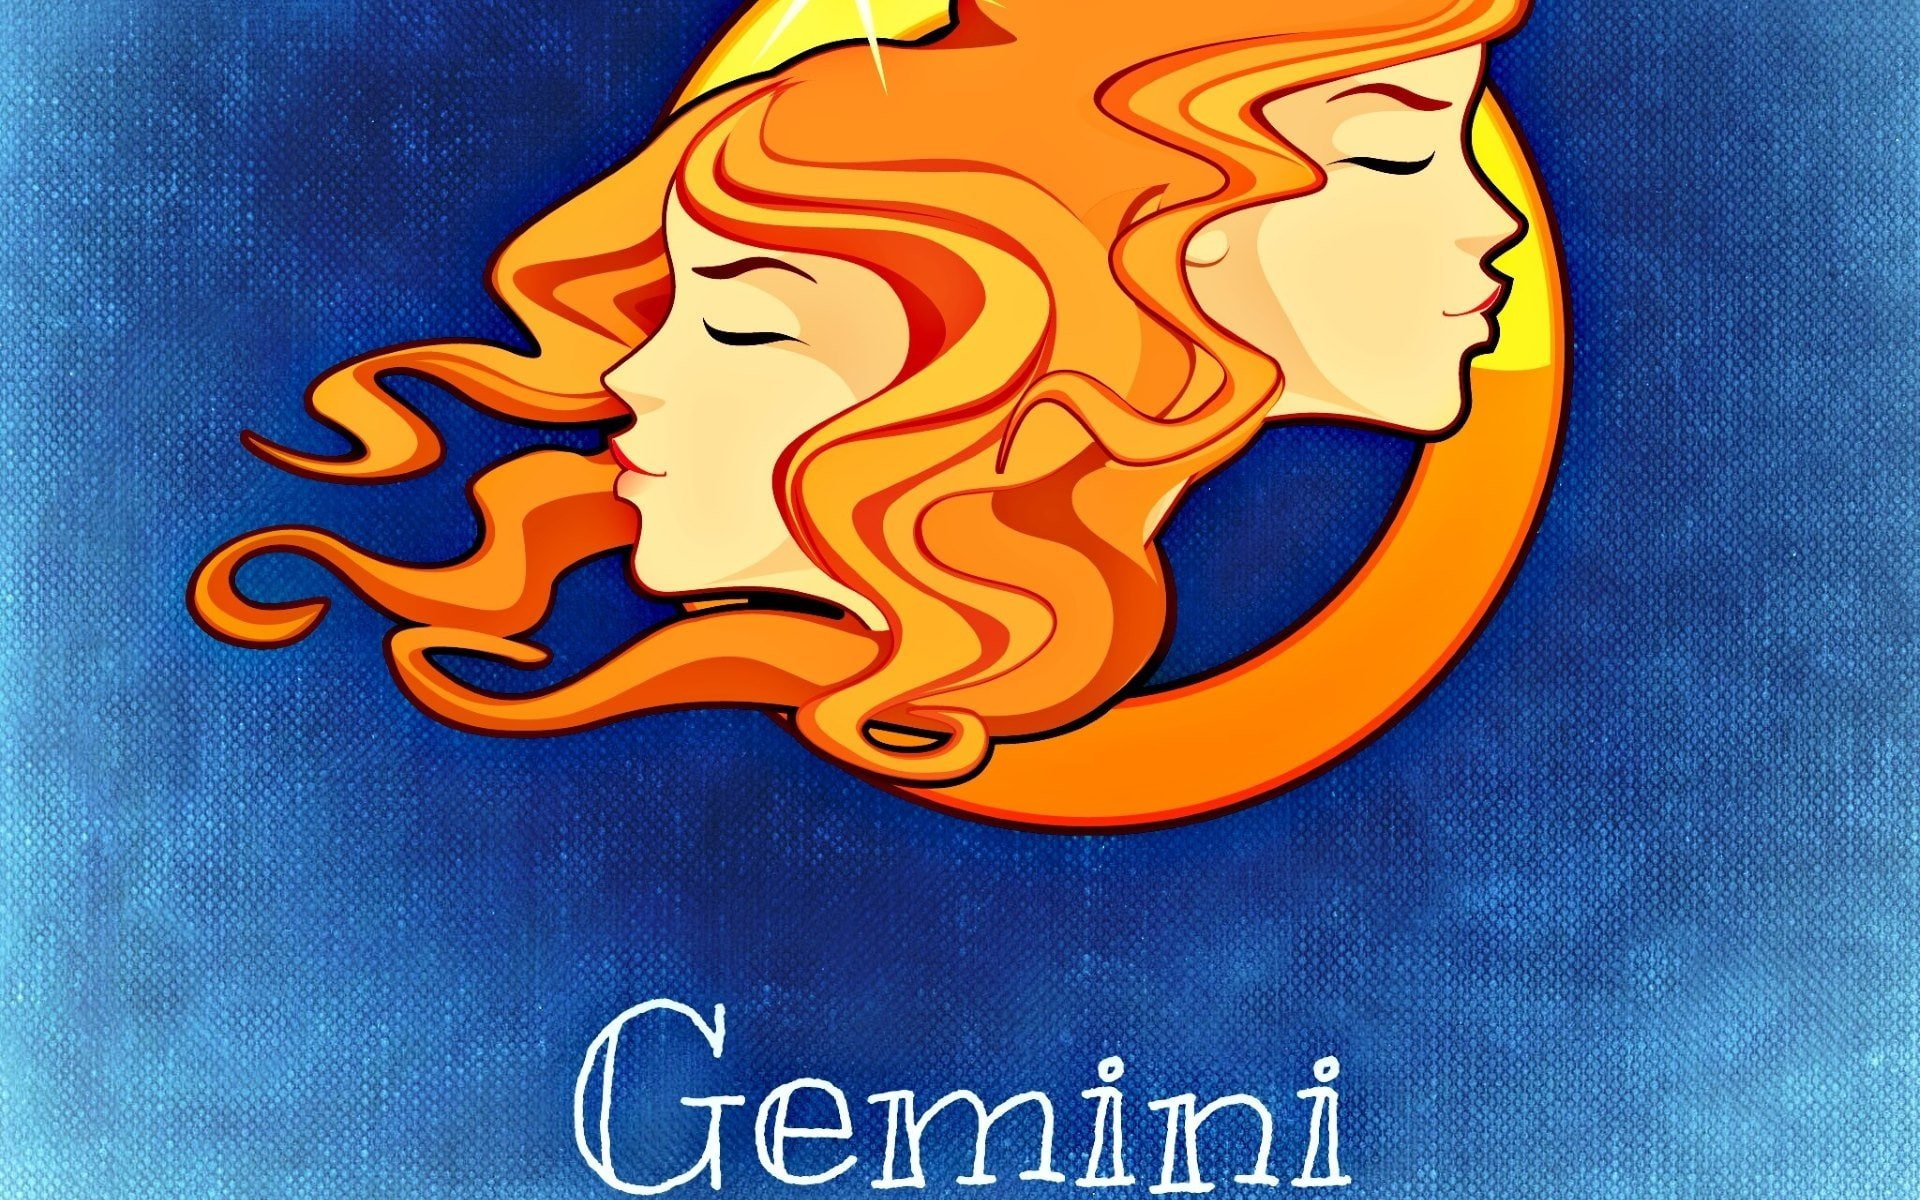 Artistic, Zodiac, Gemini (Astrology), Horoscope